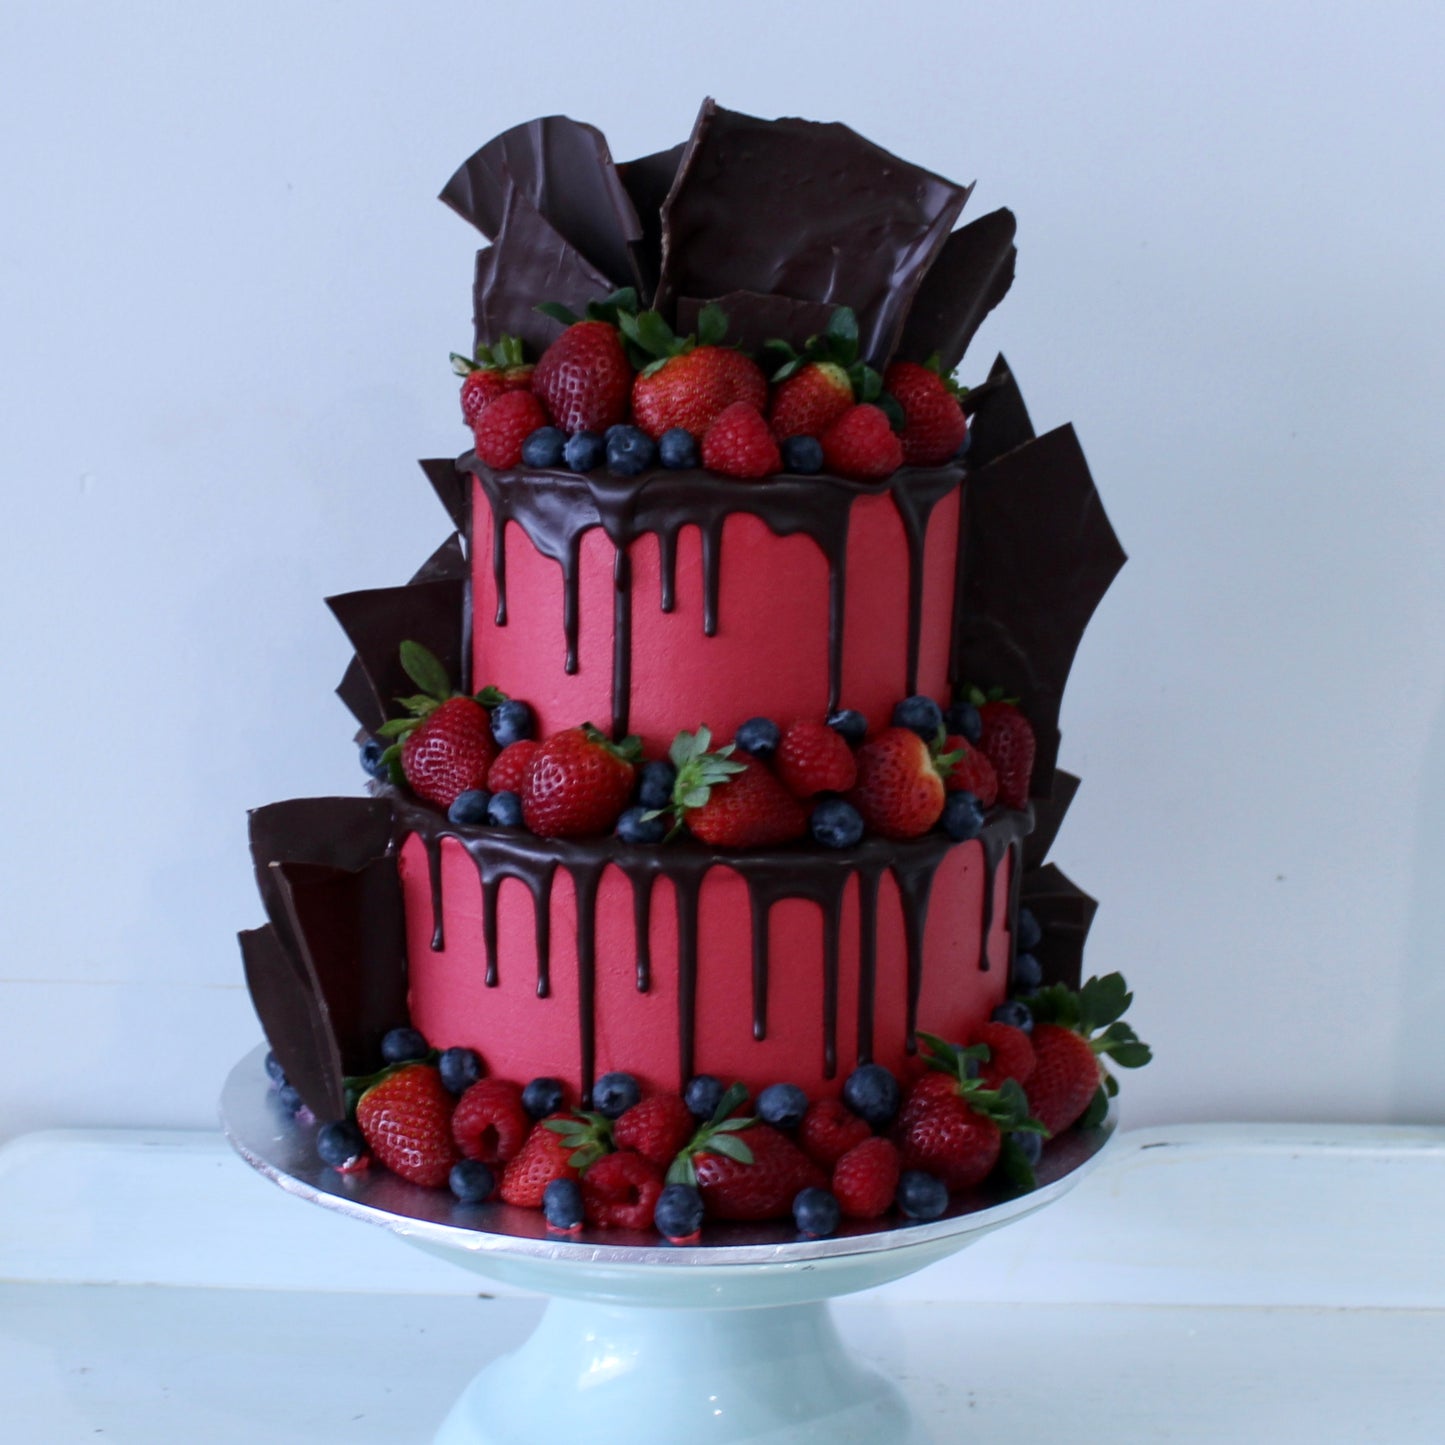 2 Tier Chocolate & Berry Cake 2 Toned